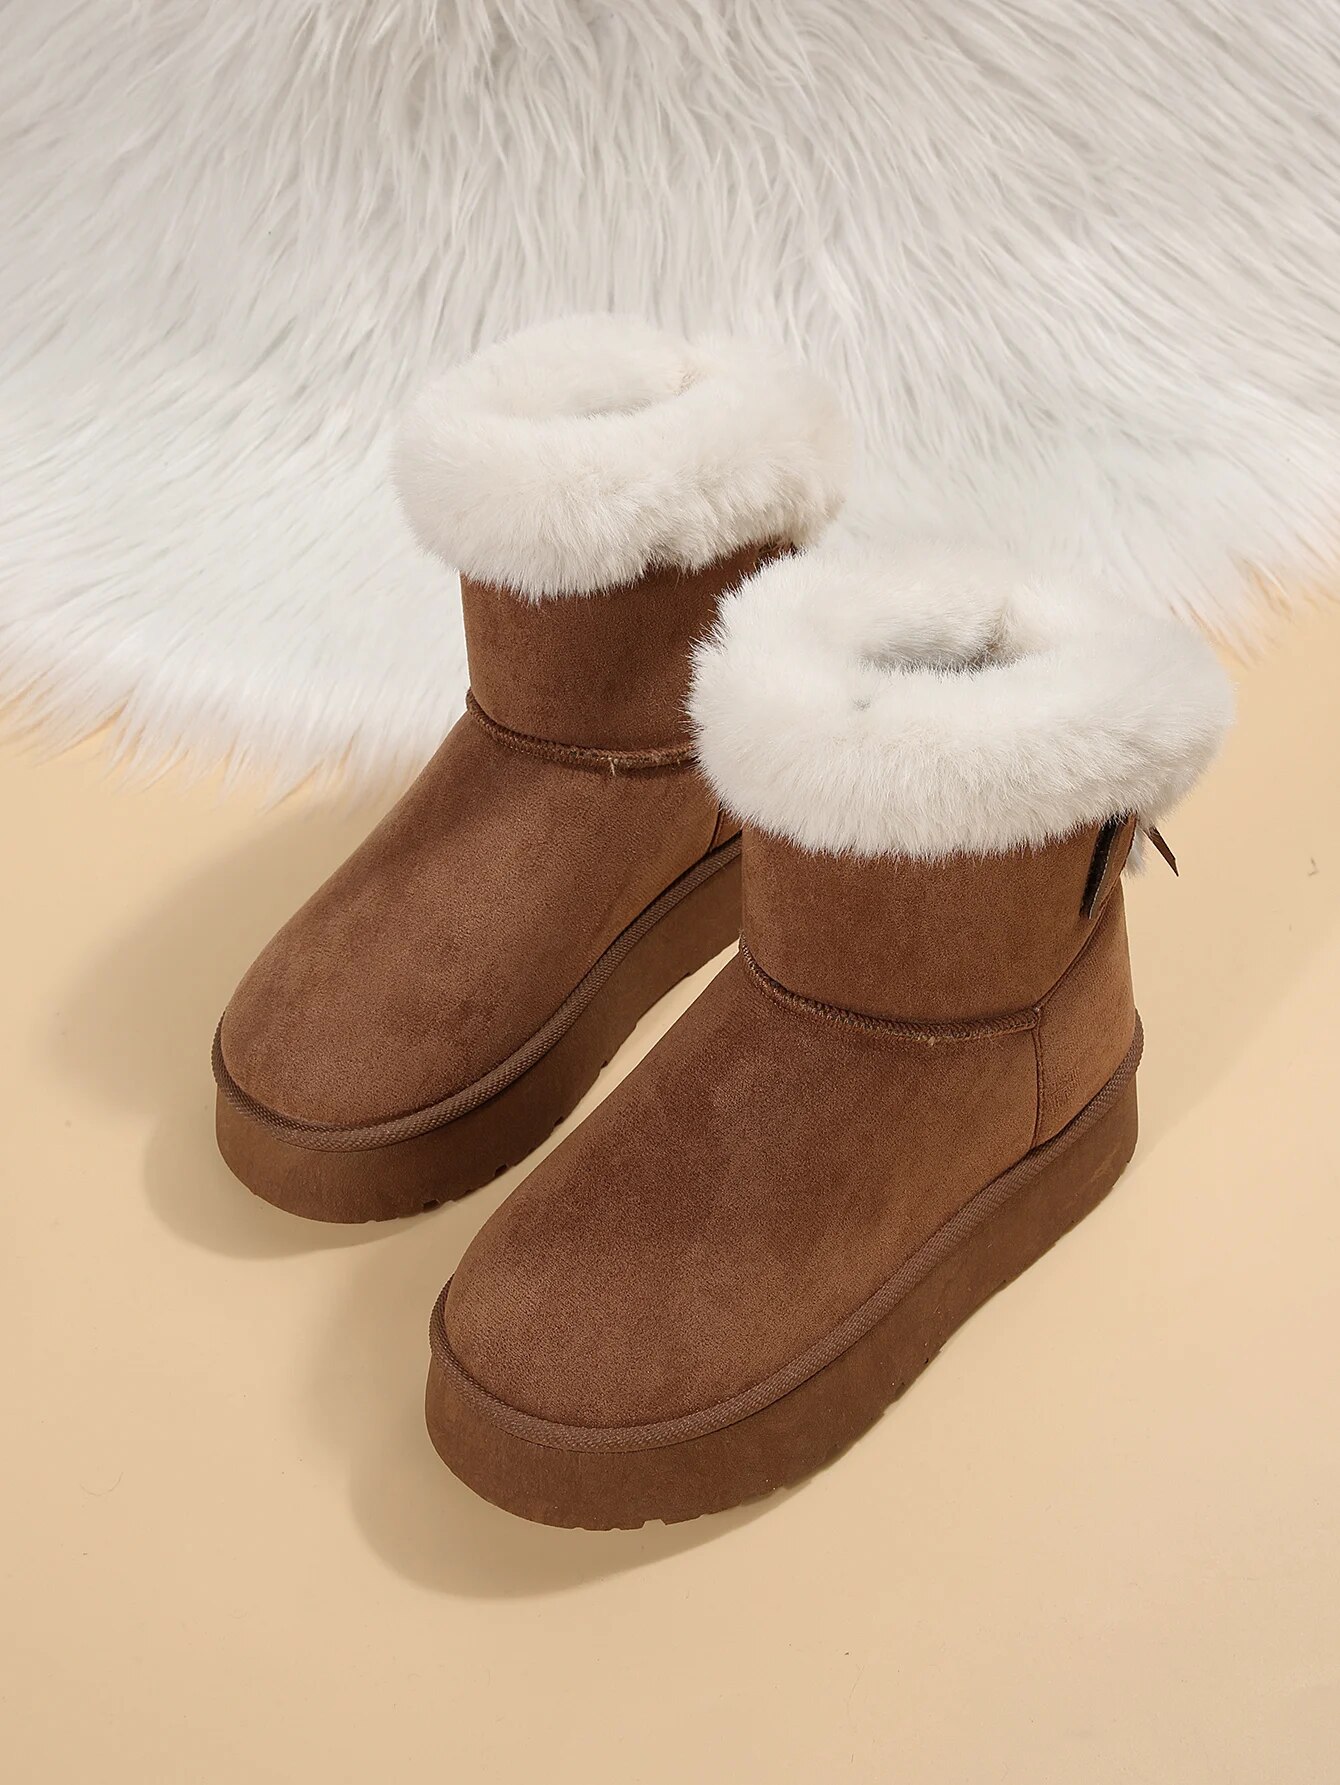 come4buy.com-Bowknot Cashmere Warm Boots Women Snow Boots